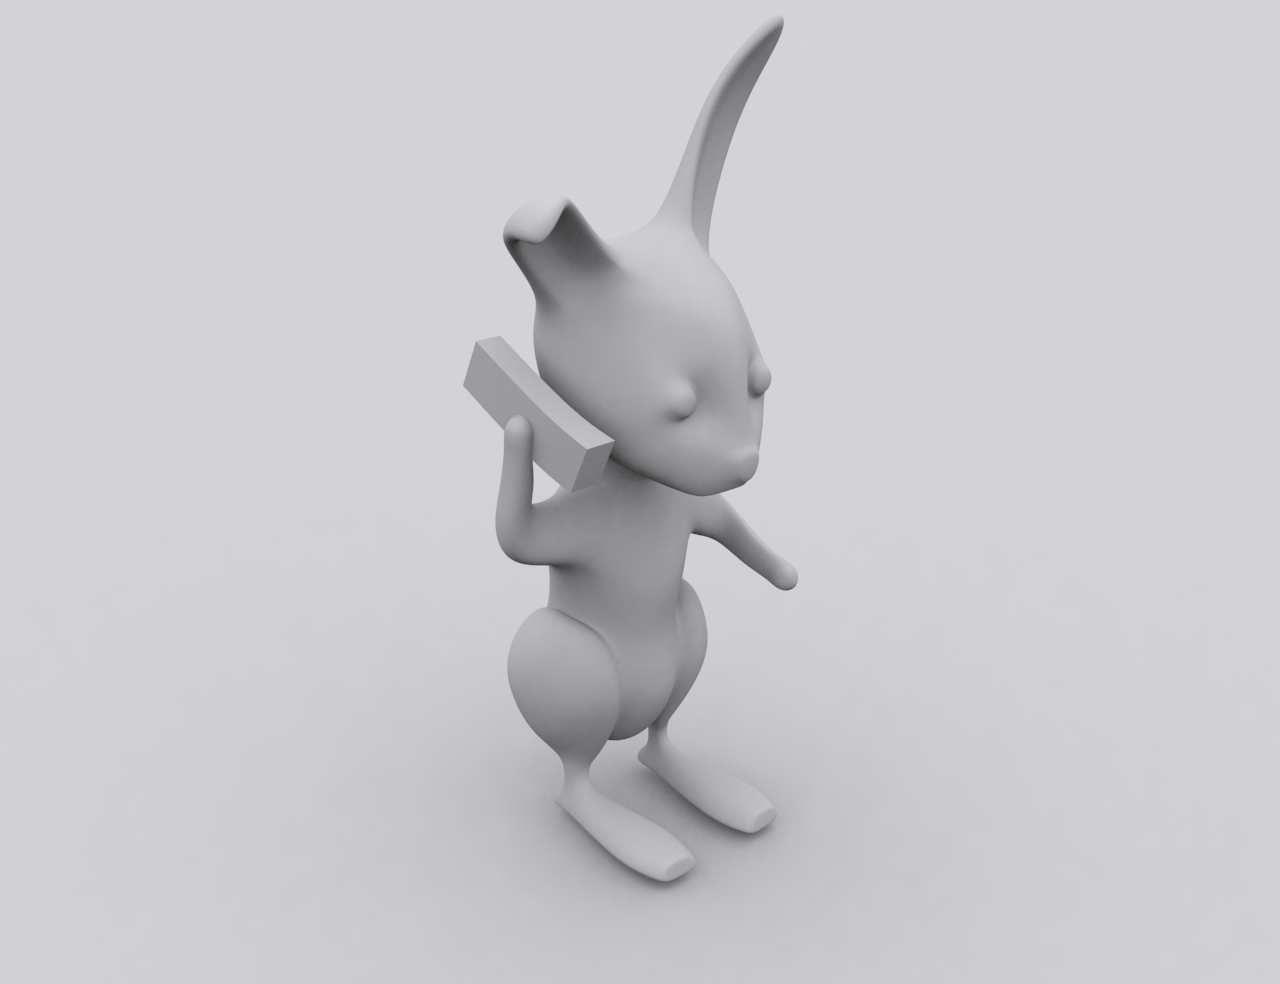 rabbit2.jpg